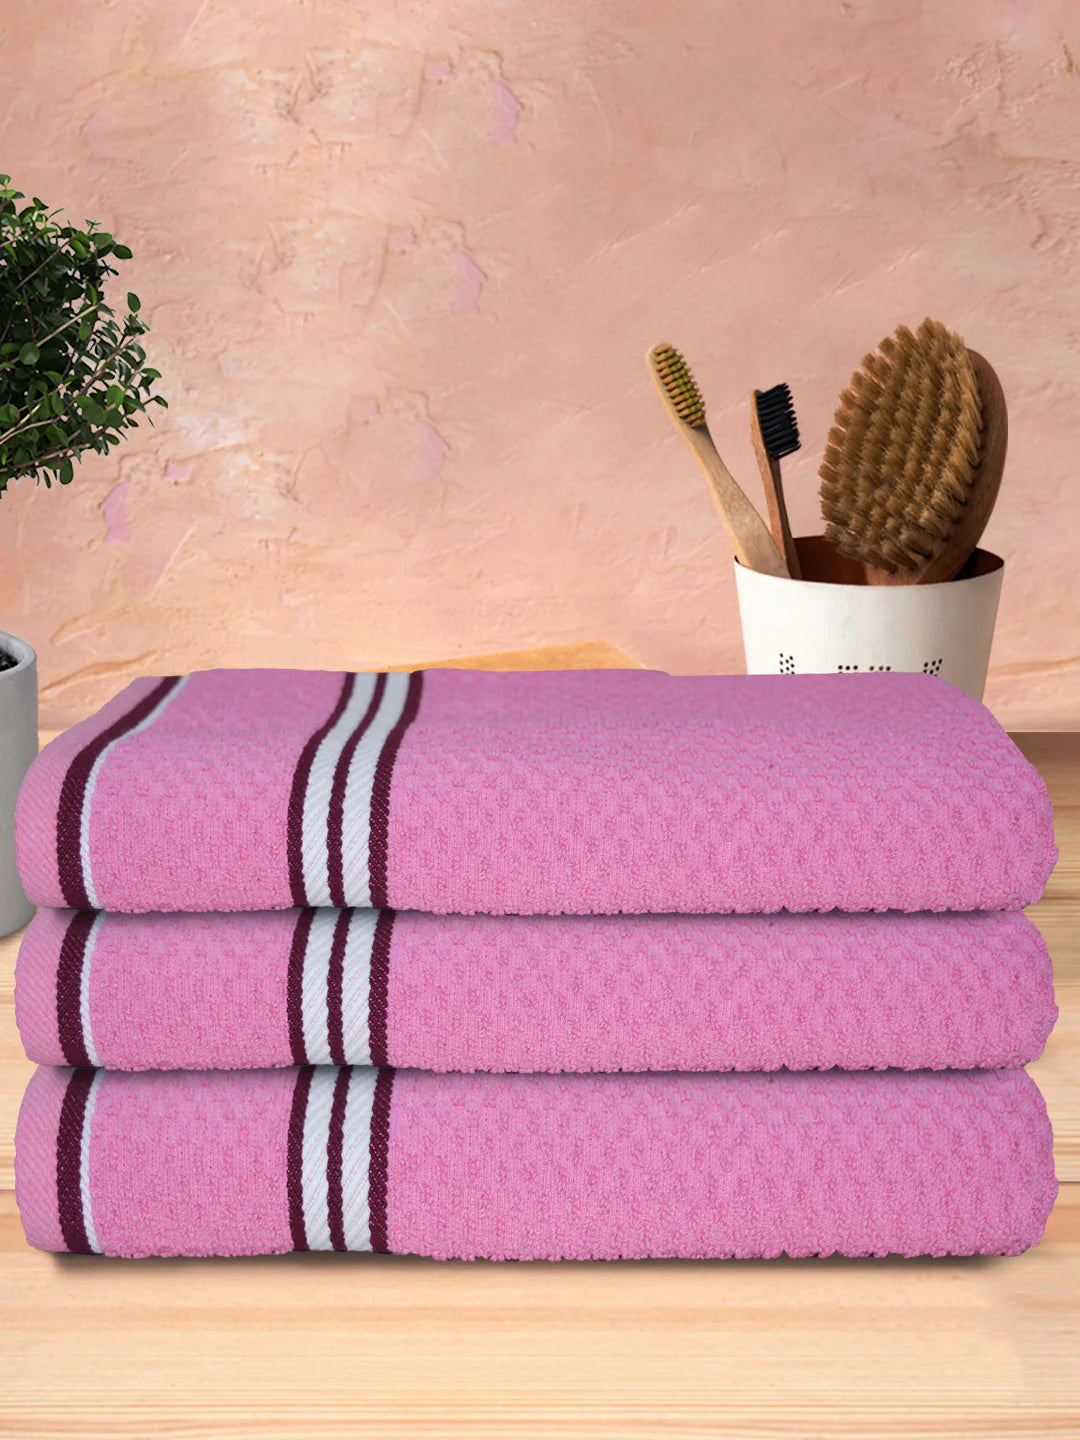 Athom Living Popcorn Textured Solid Bath Towel Pink 67x137 Cm Pack Of 3